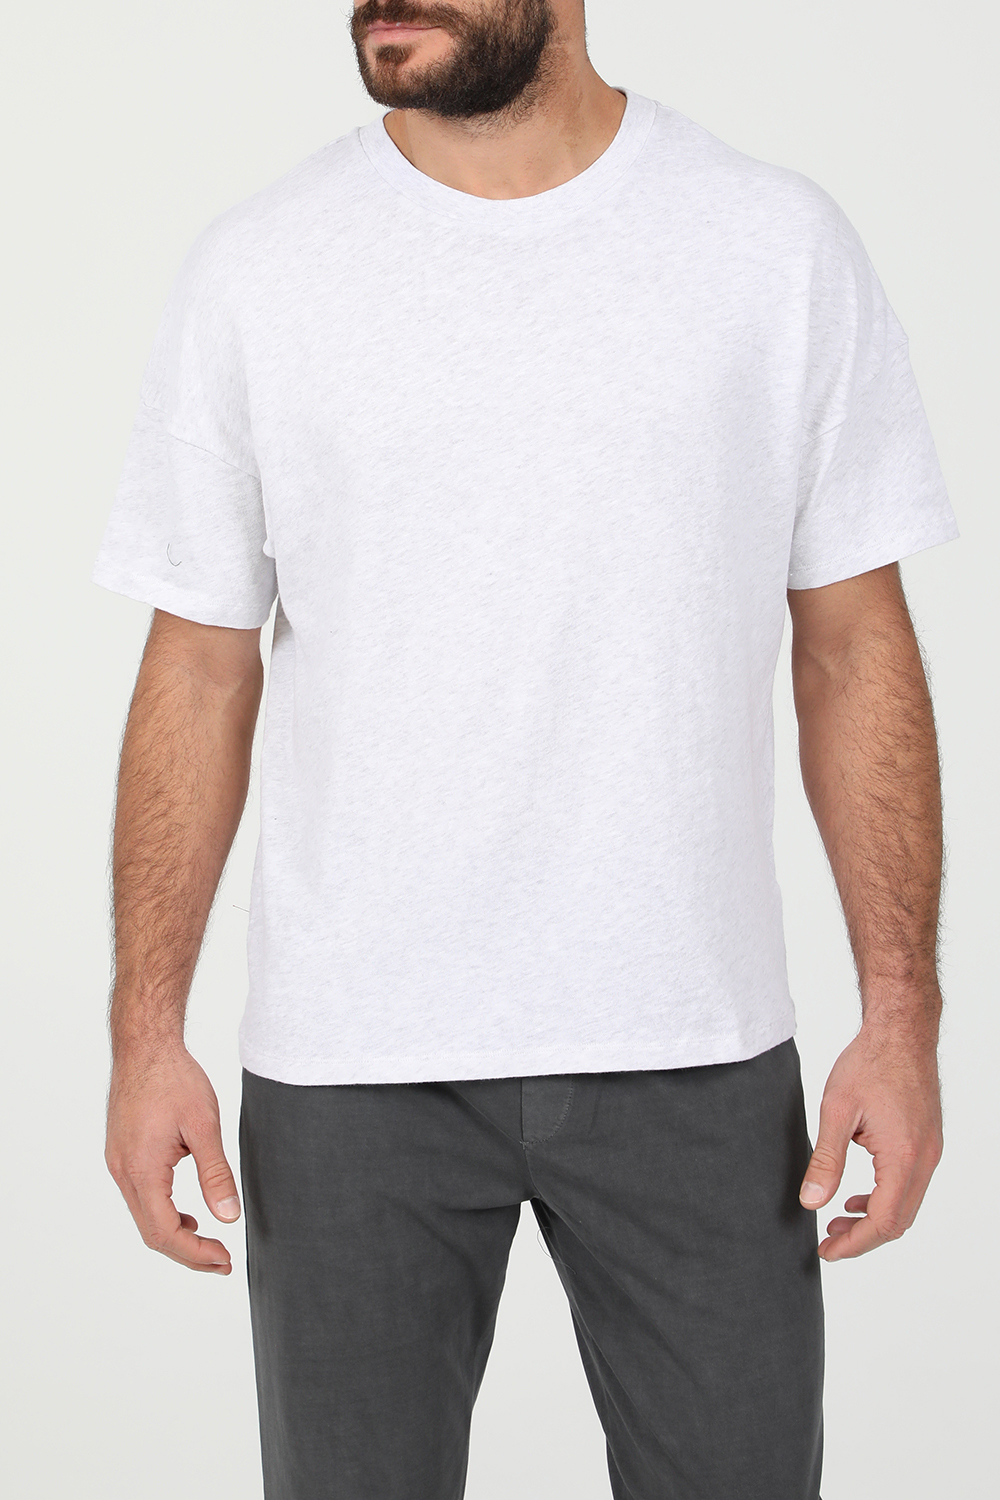 AMERICAN VINTAGE – Ανδρικο t-shirt AMERICAN VINTAGE λευκο